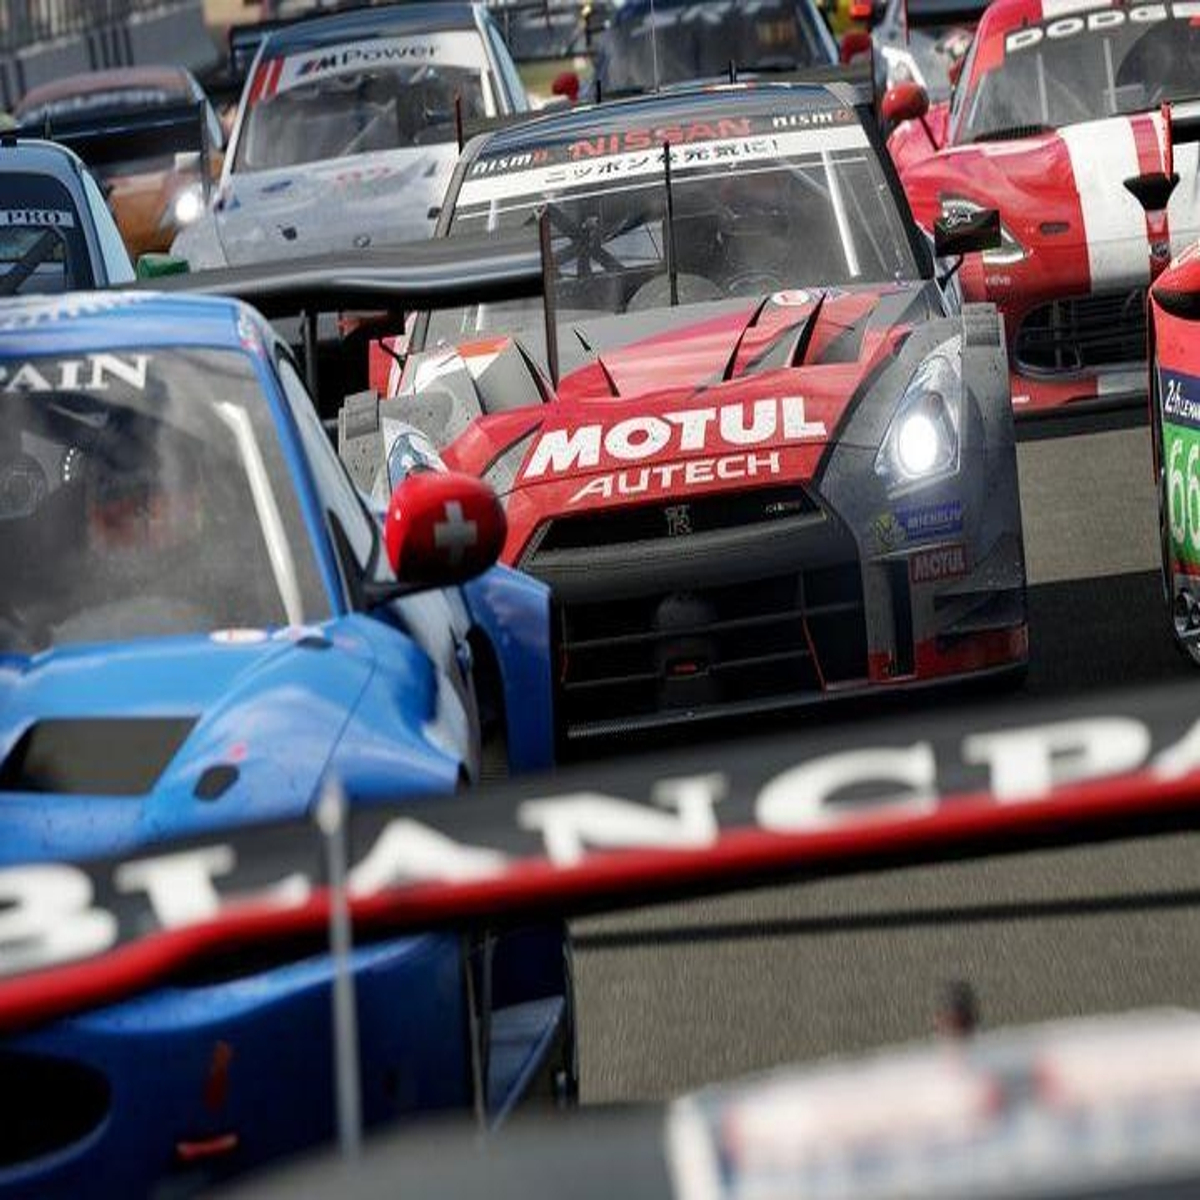 Requisitos Mínimos e Recomendados de Forza Motorsport 7